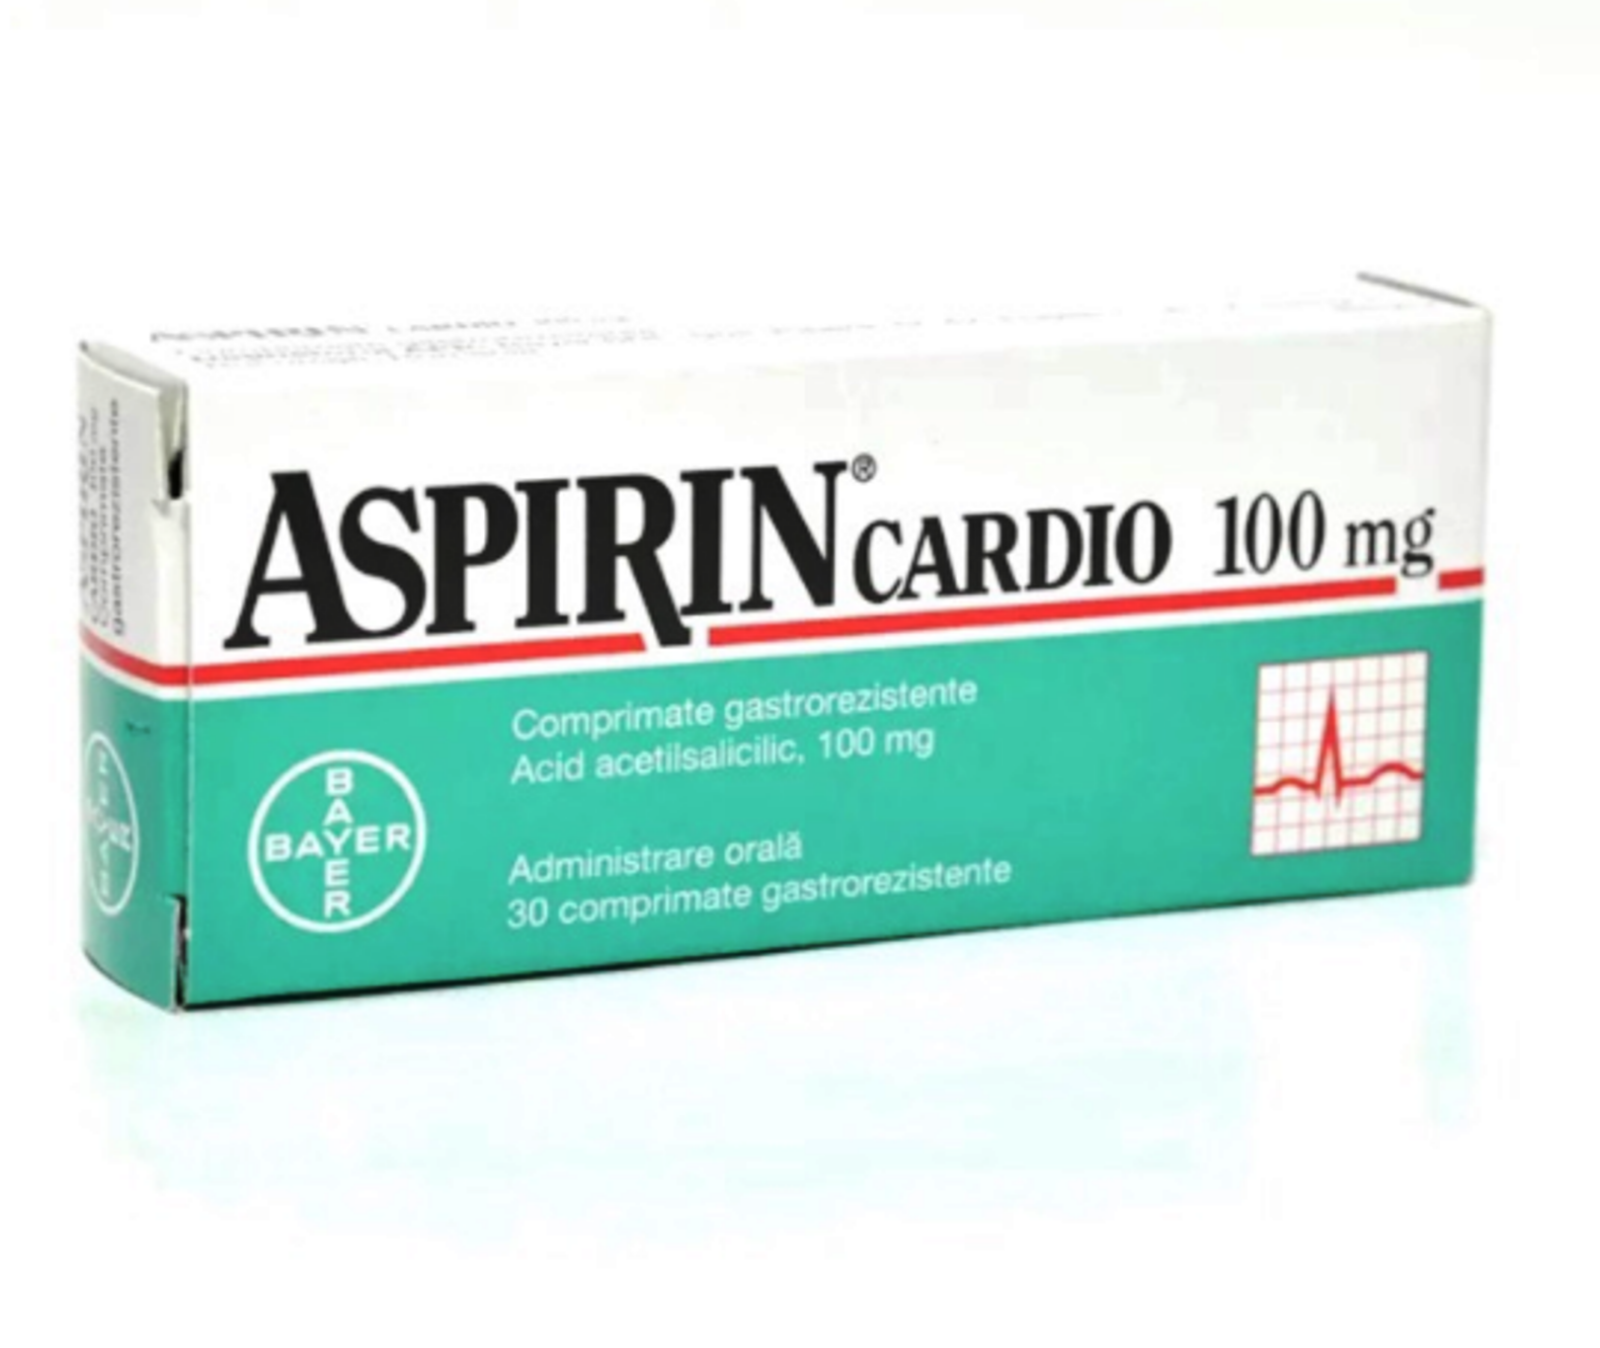 1 Box Bayer Aspirin Cardio 100’s Enteric Coated Tablet Free Shipping .